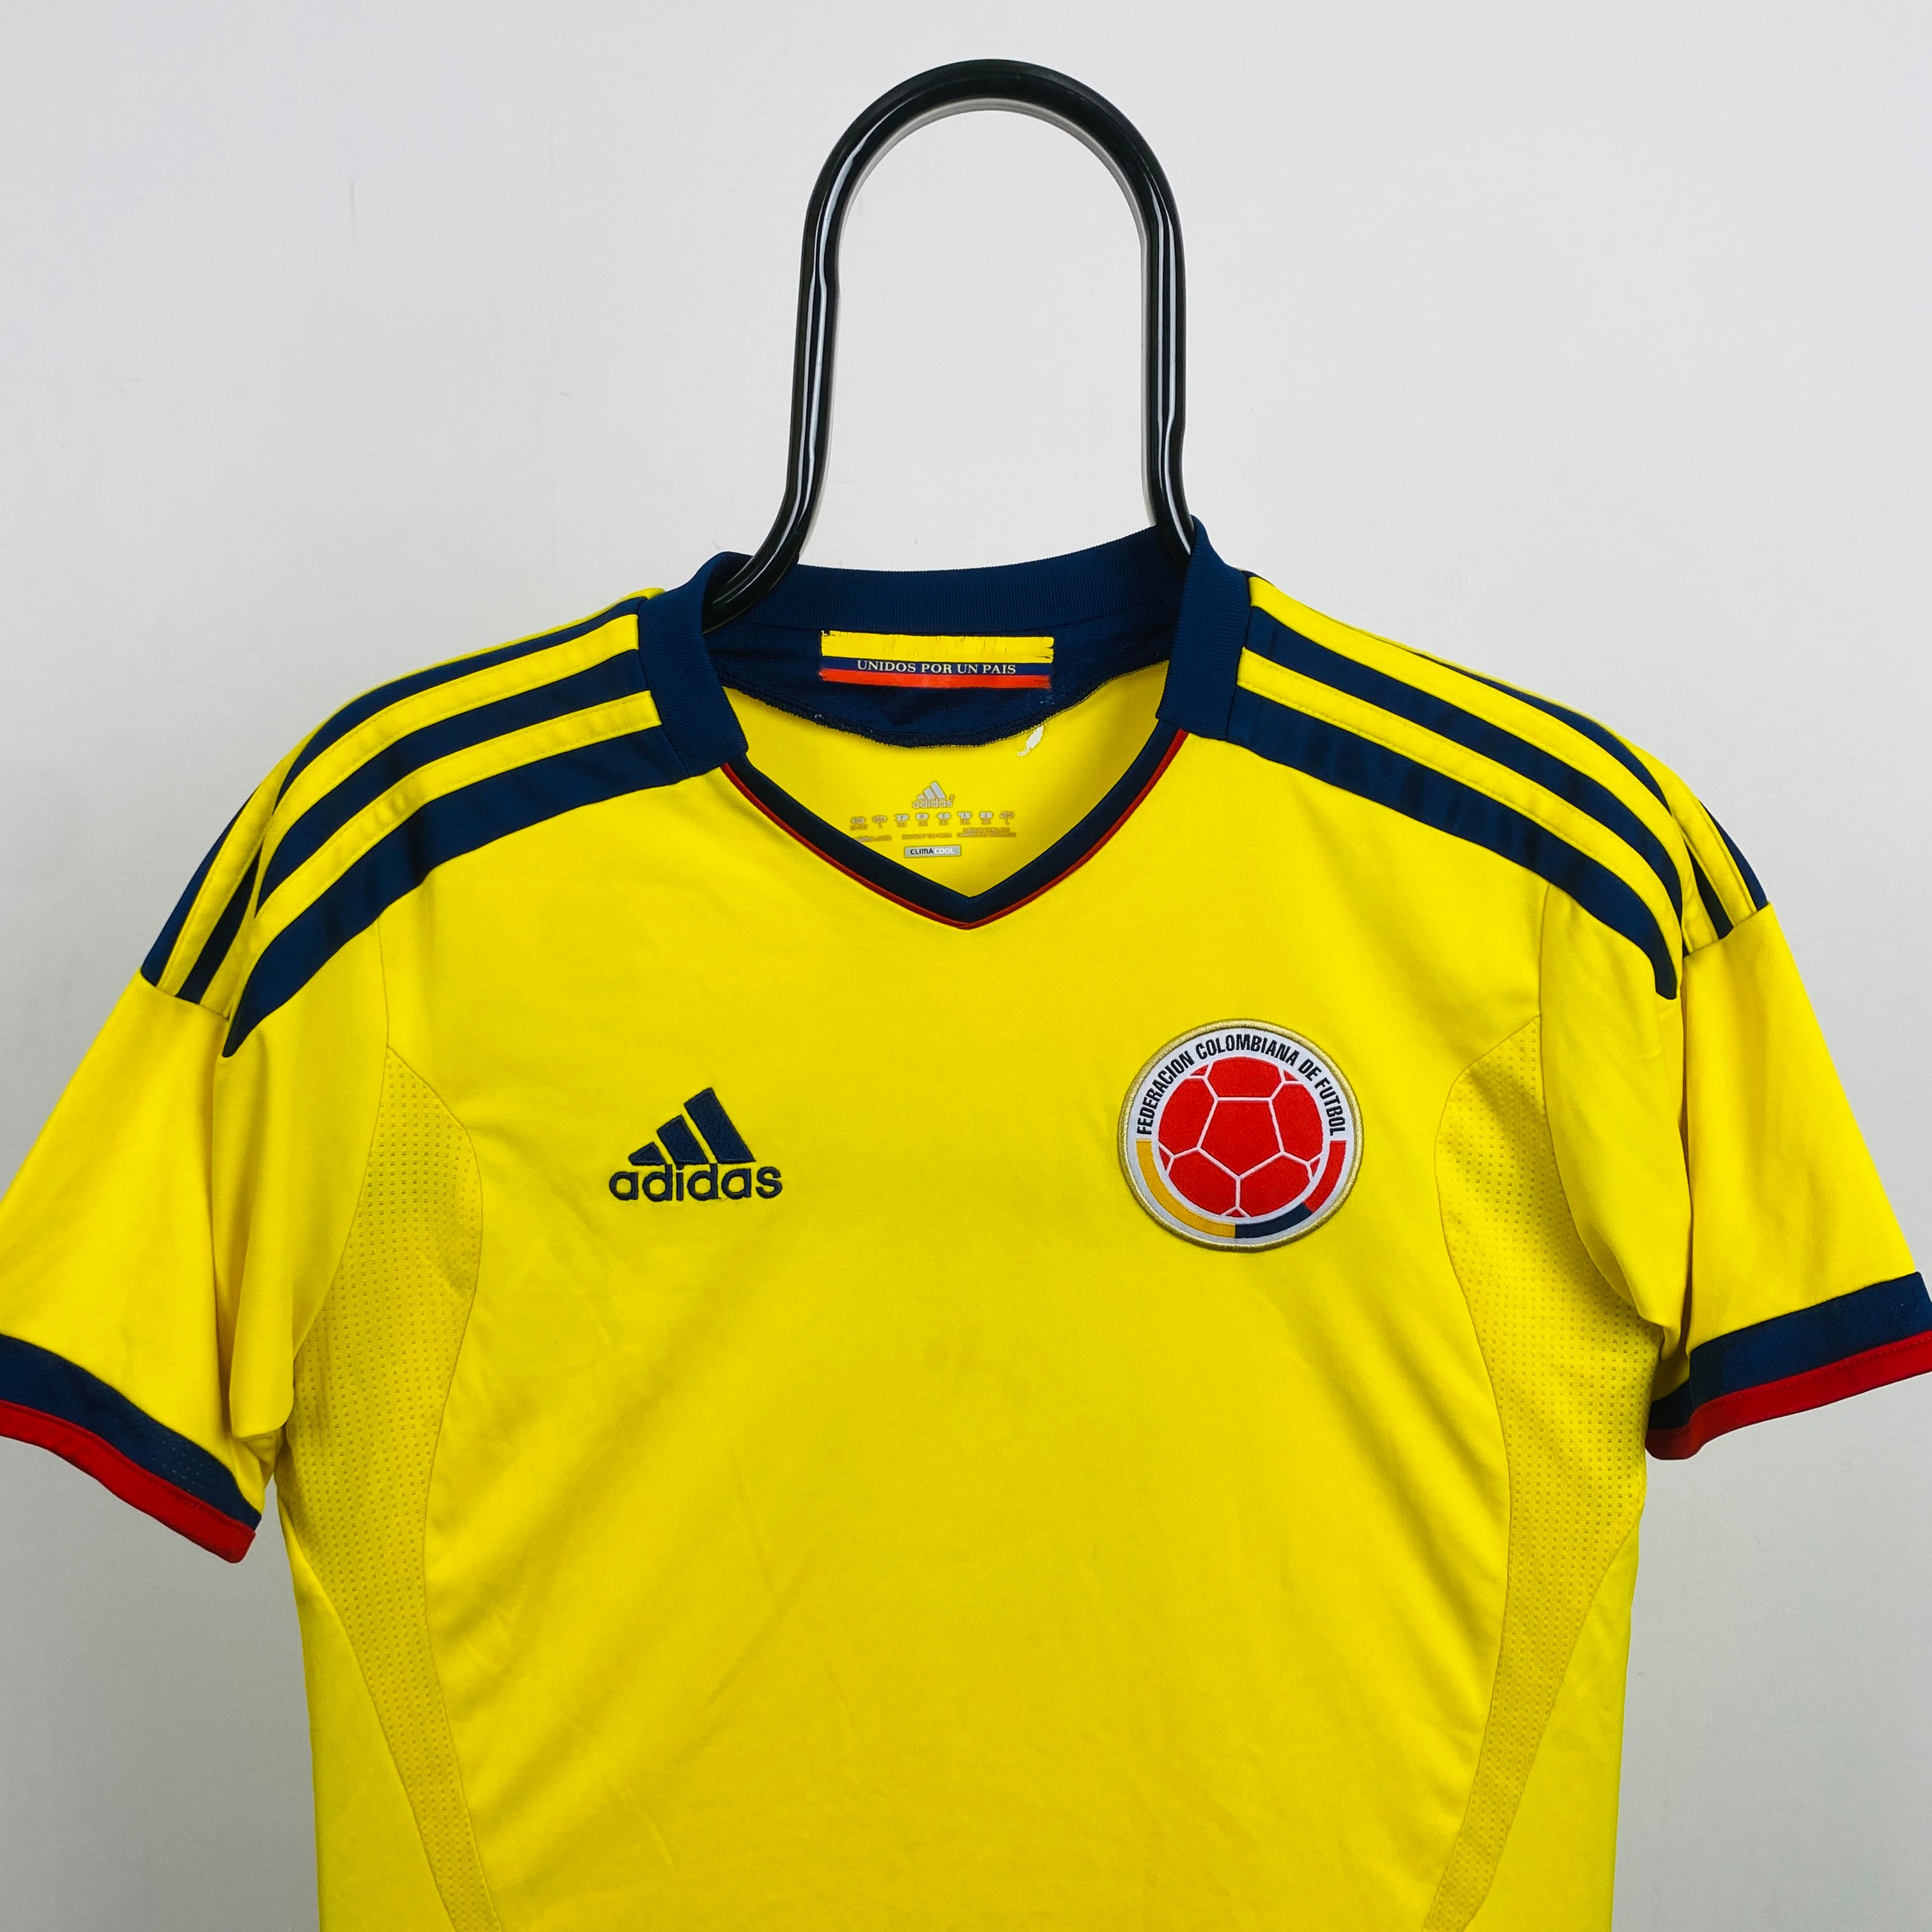 00s Adidas Colombia Football Shirt T-Shirt Yellow Large